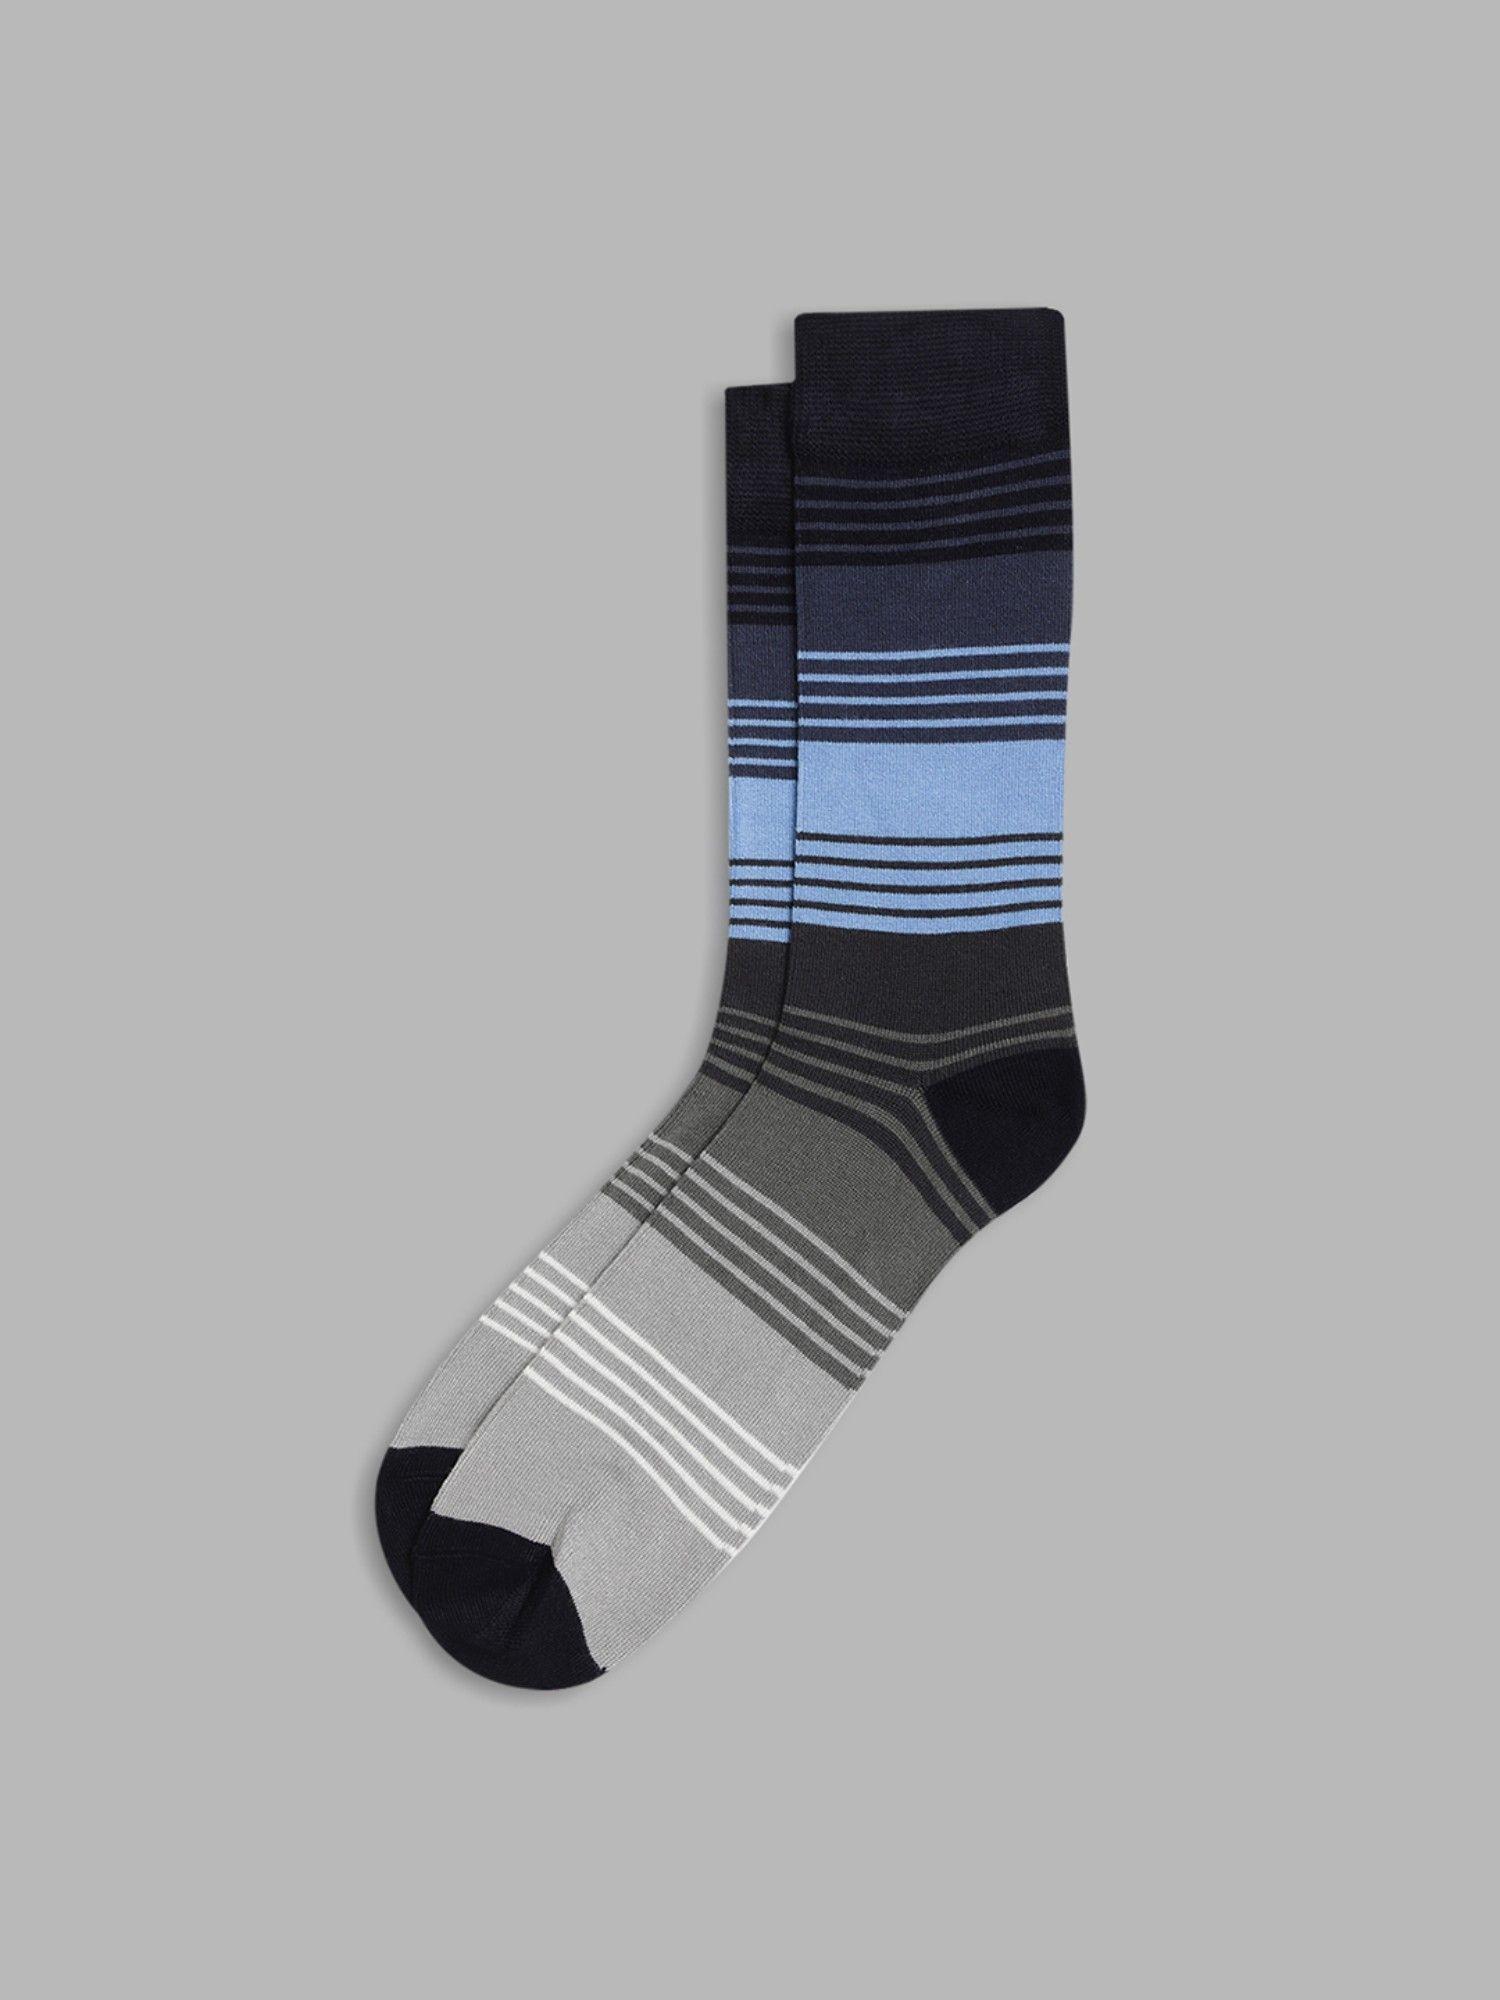 mens blue & multi-color stripes socks